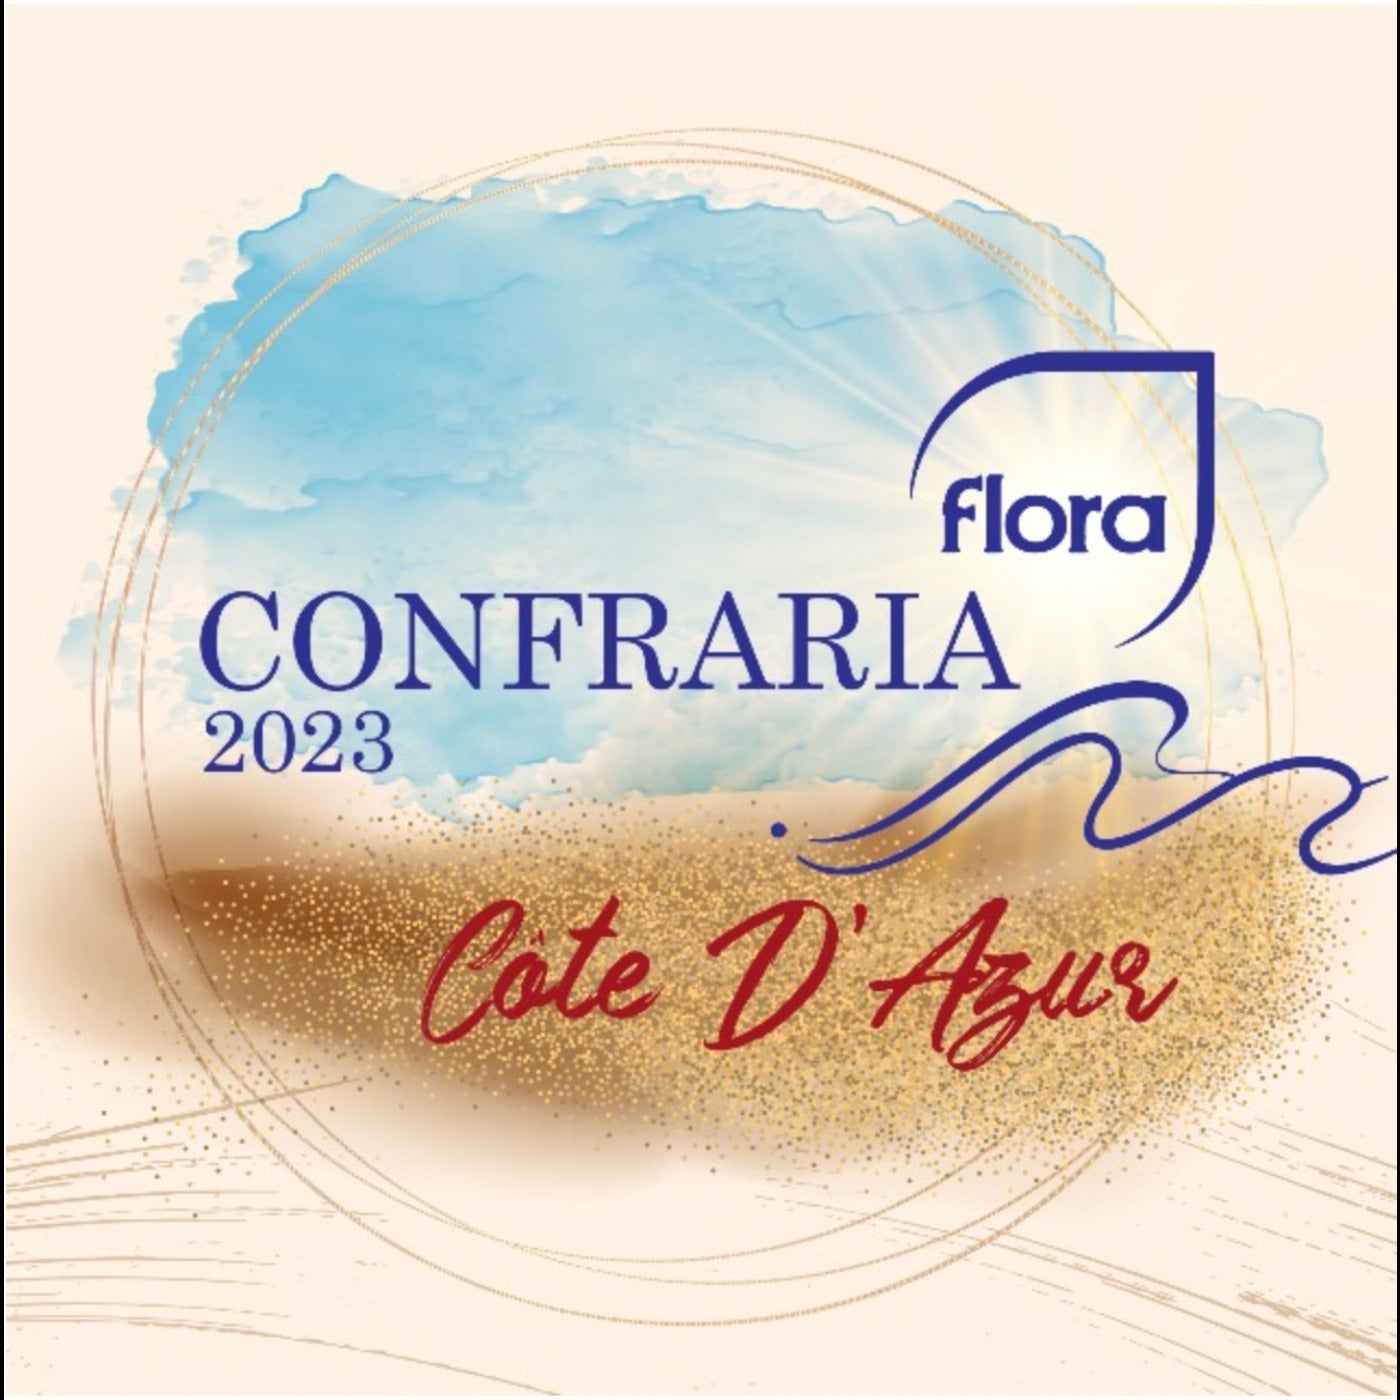 Confraria Flora 2023